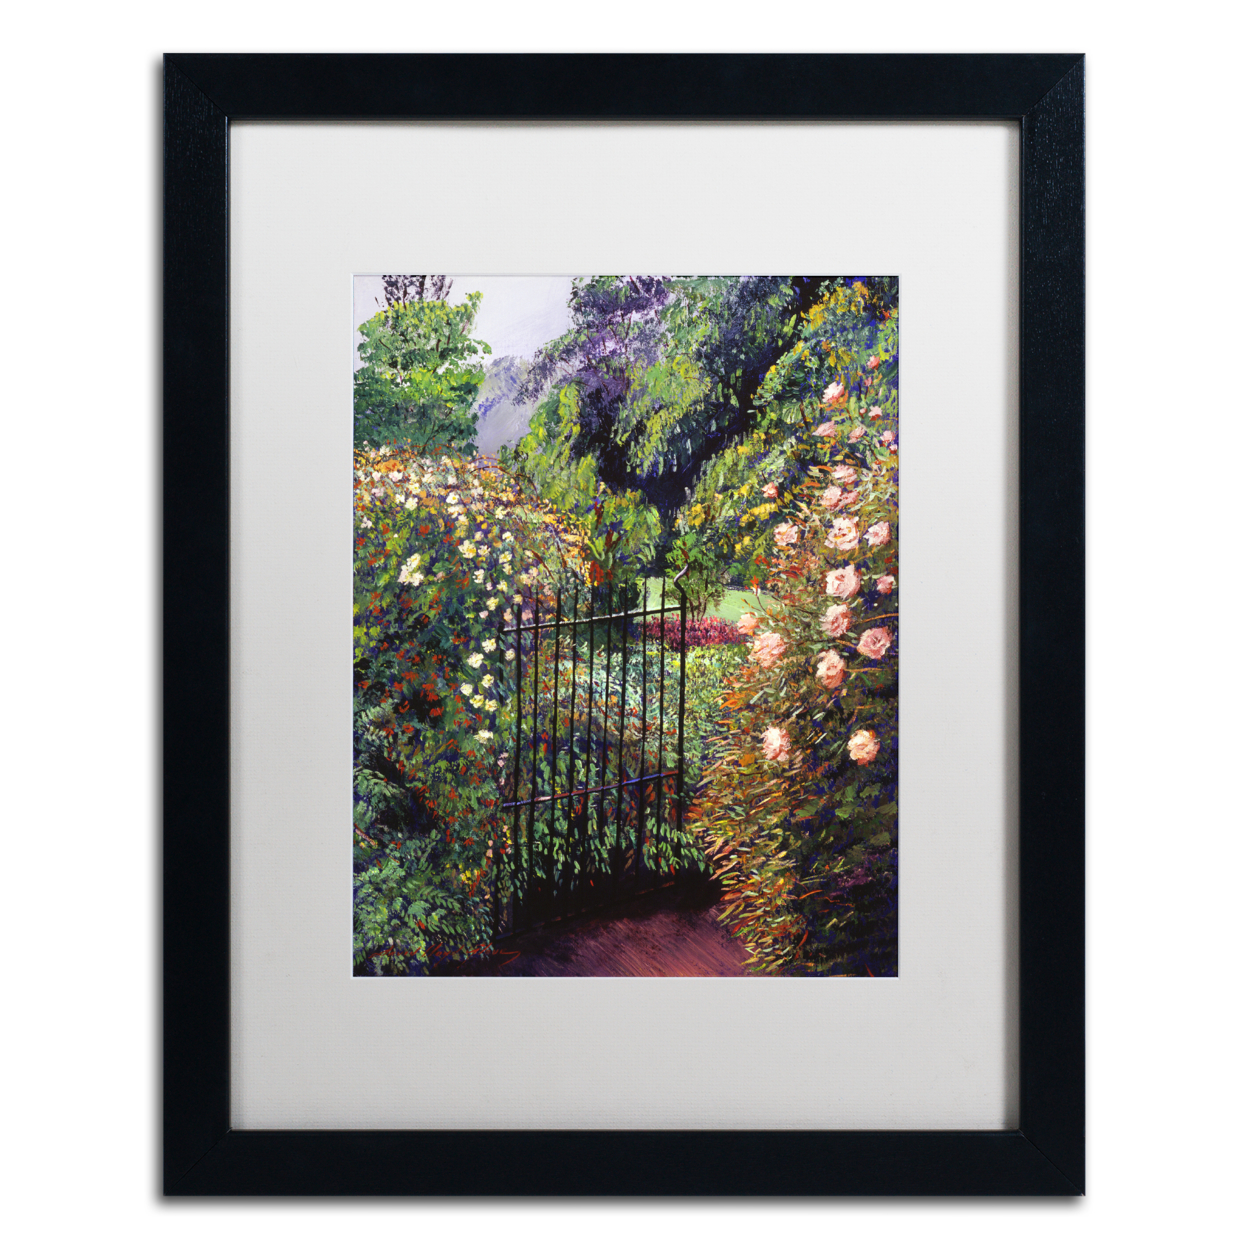 David Lloyd Glover 'Quiet Garden Entrance' Black Wooden Framed Art 18 X 22 Inches